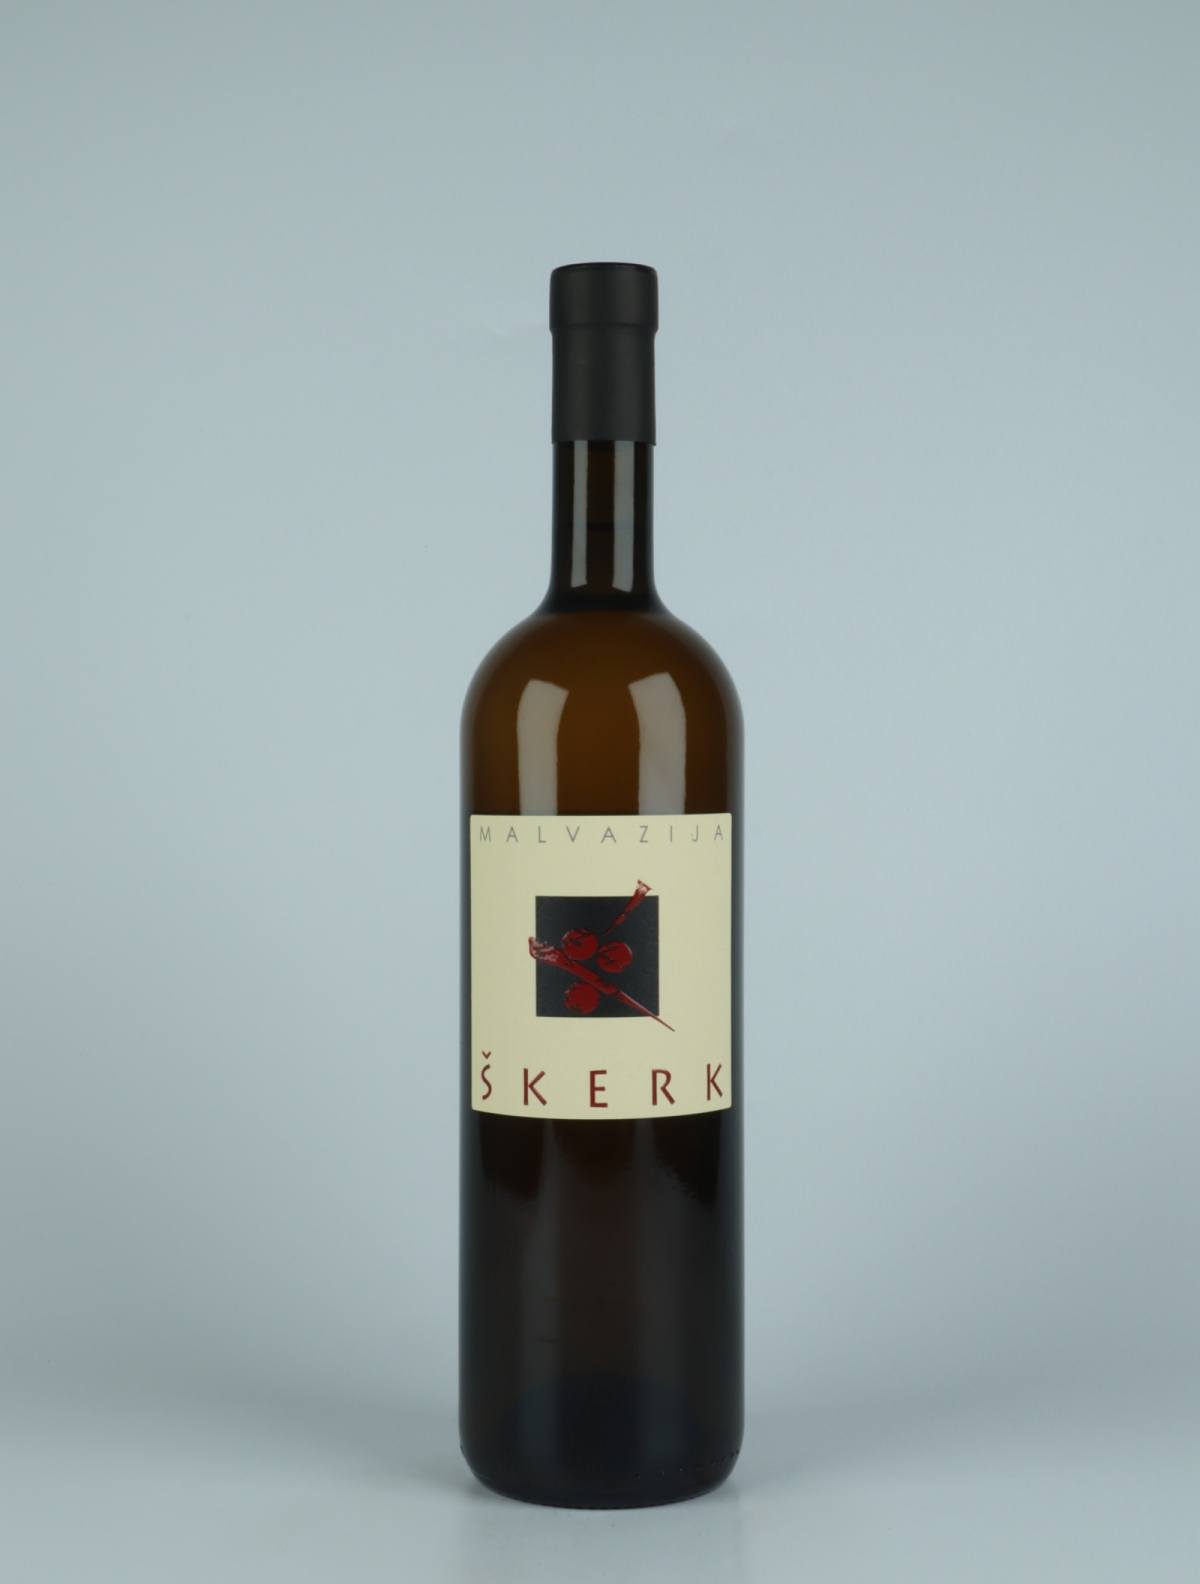 A bottle 2020 Malvazija Orange wine from Skerk, Friuli in Italy